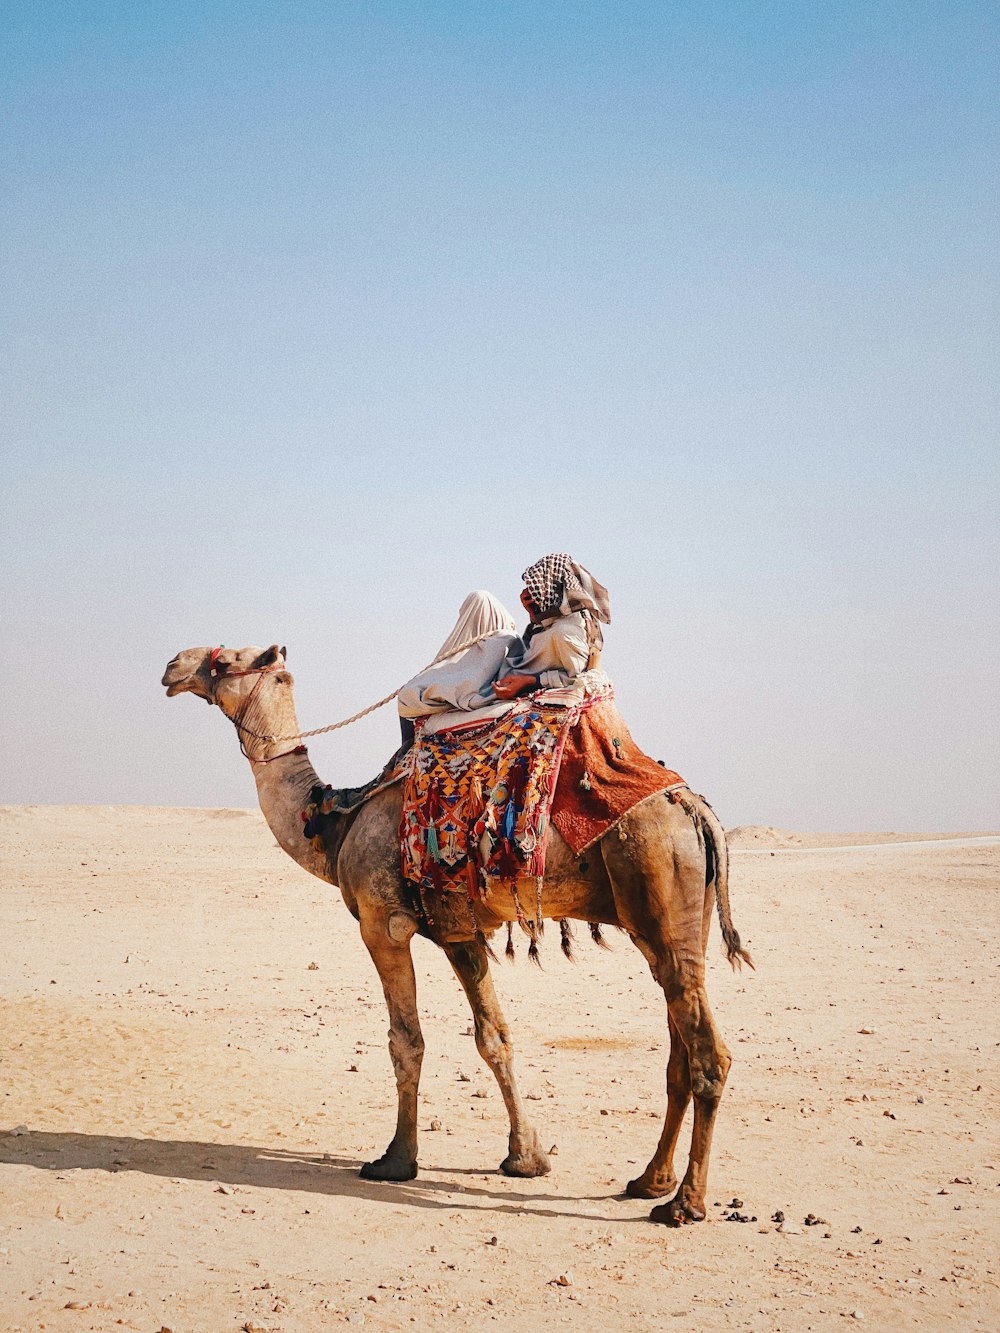 a man riding a camel in the desert